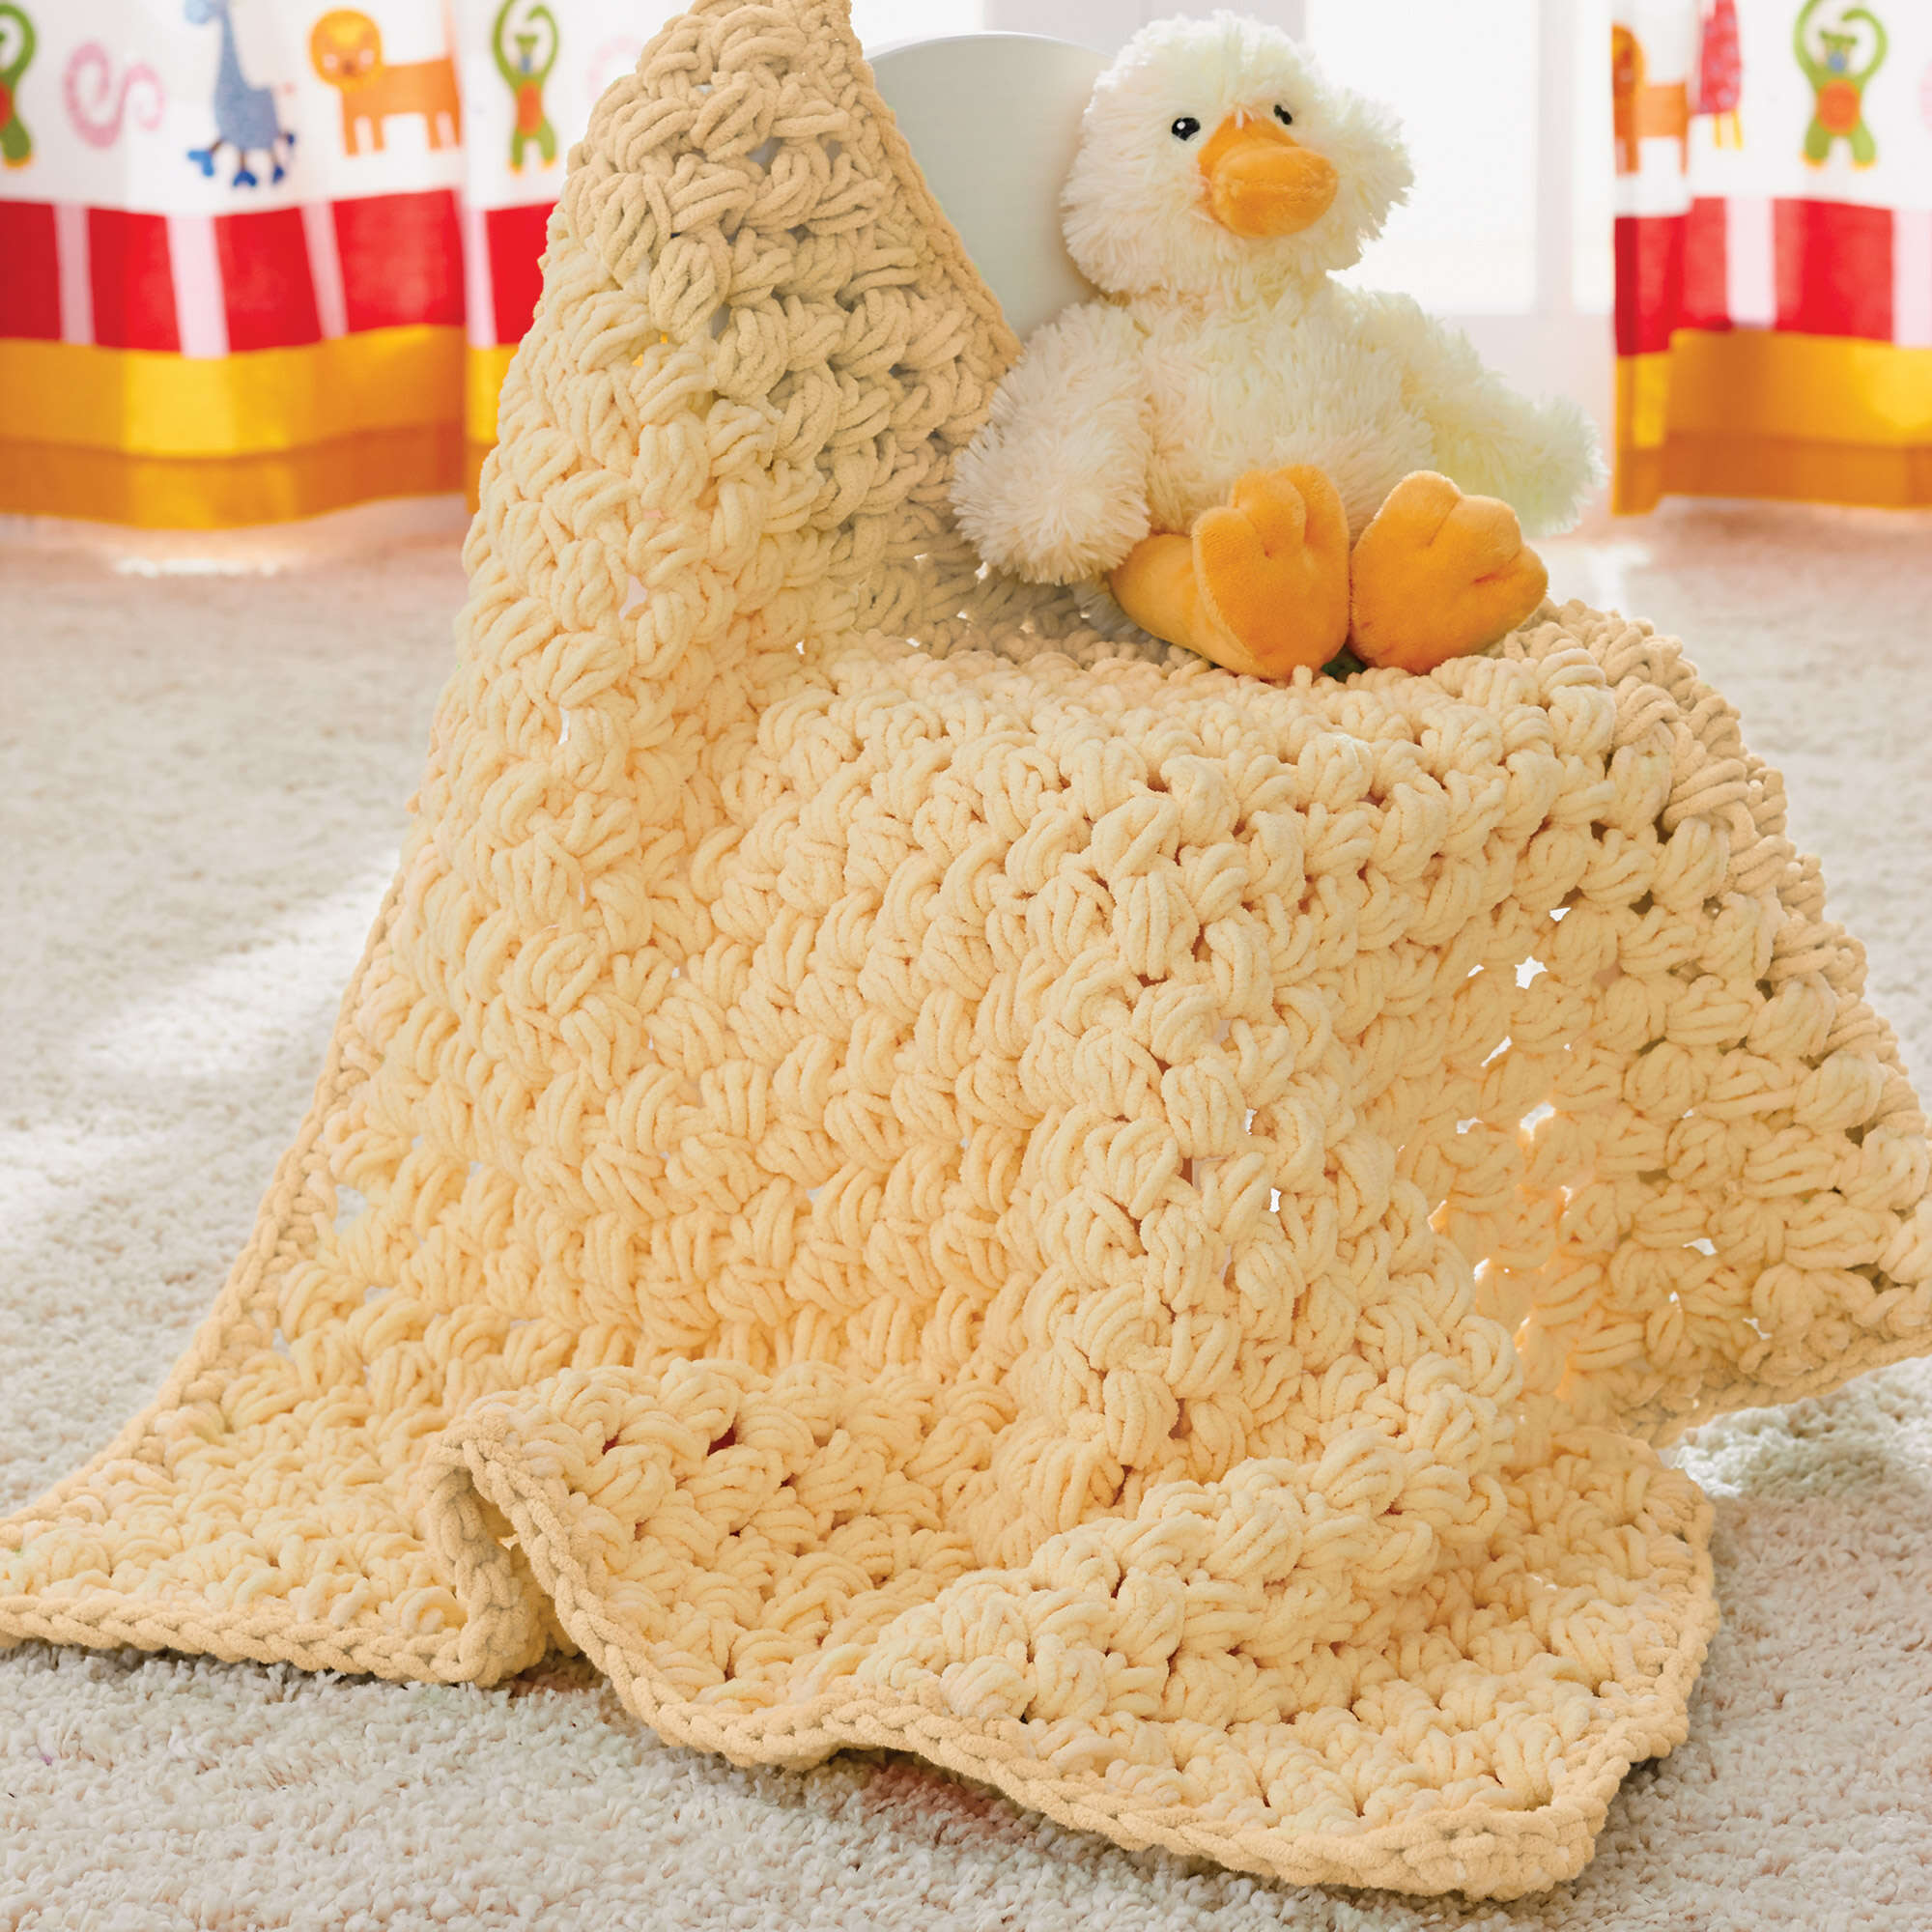 Puffy teddy bear crochet pattern